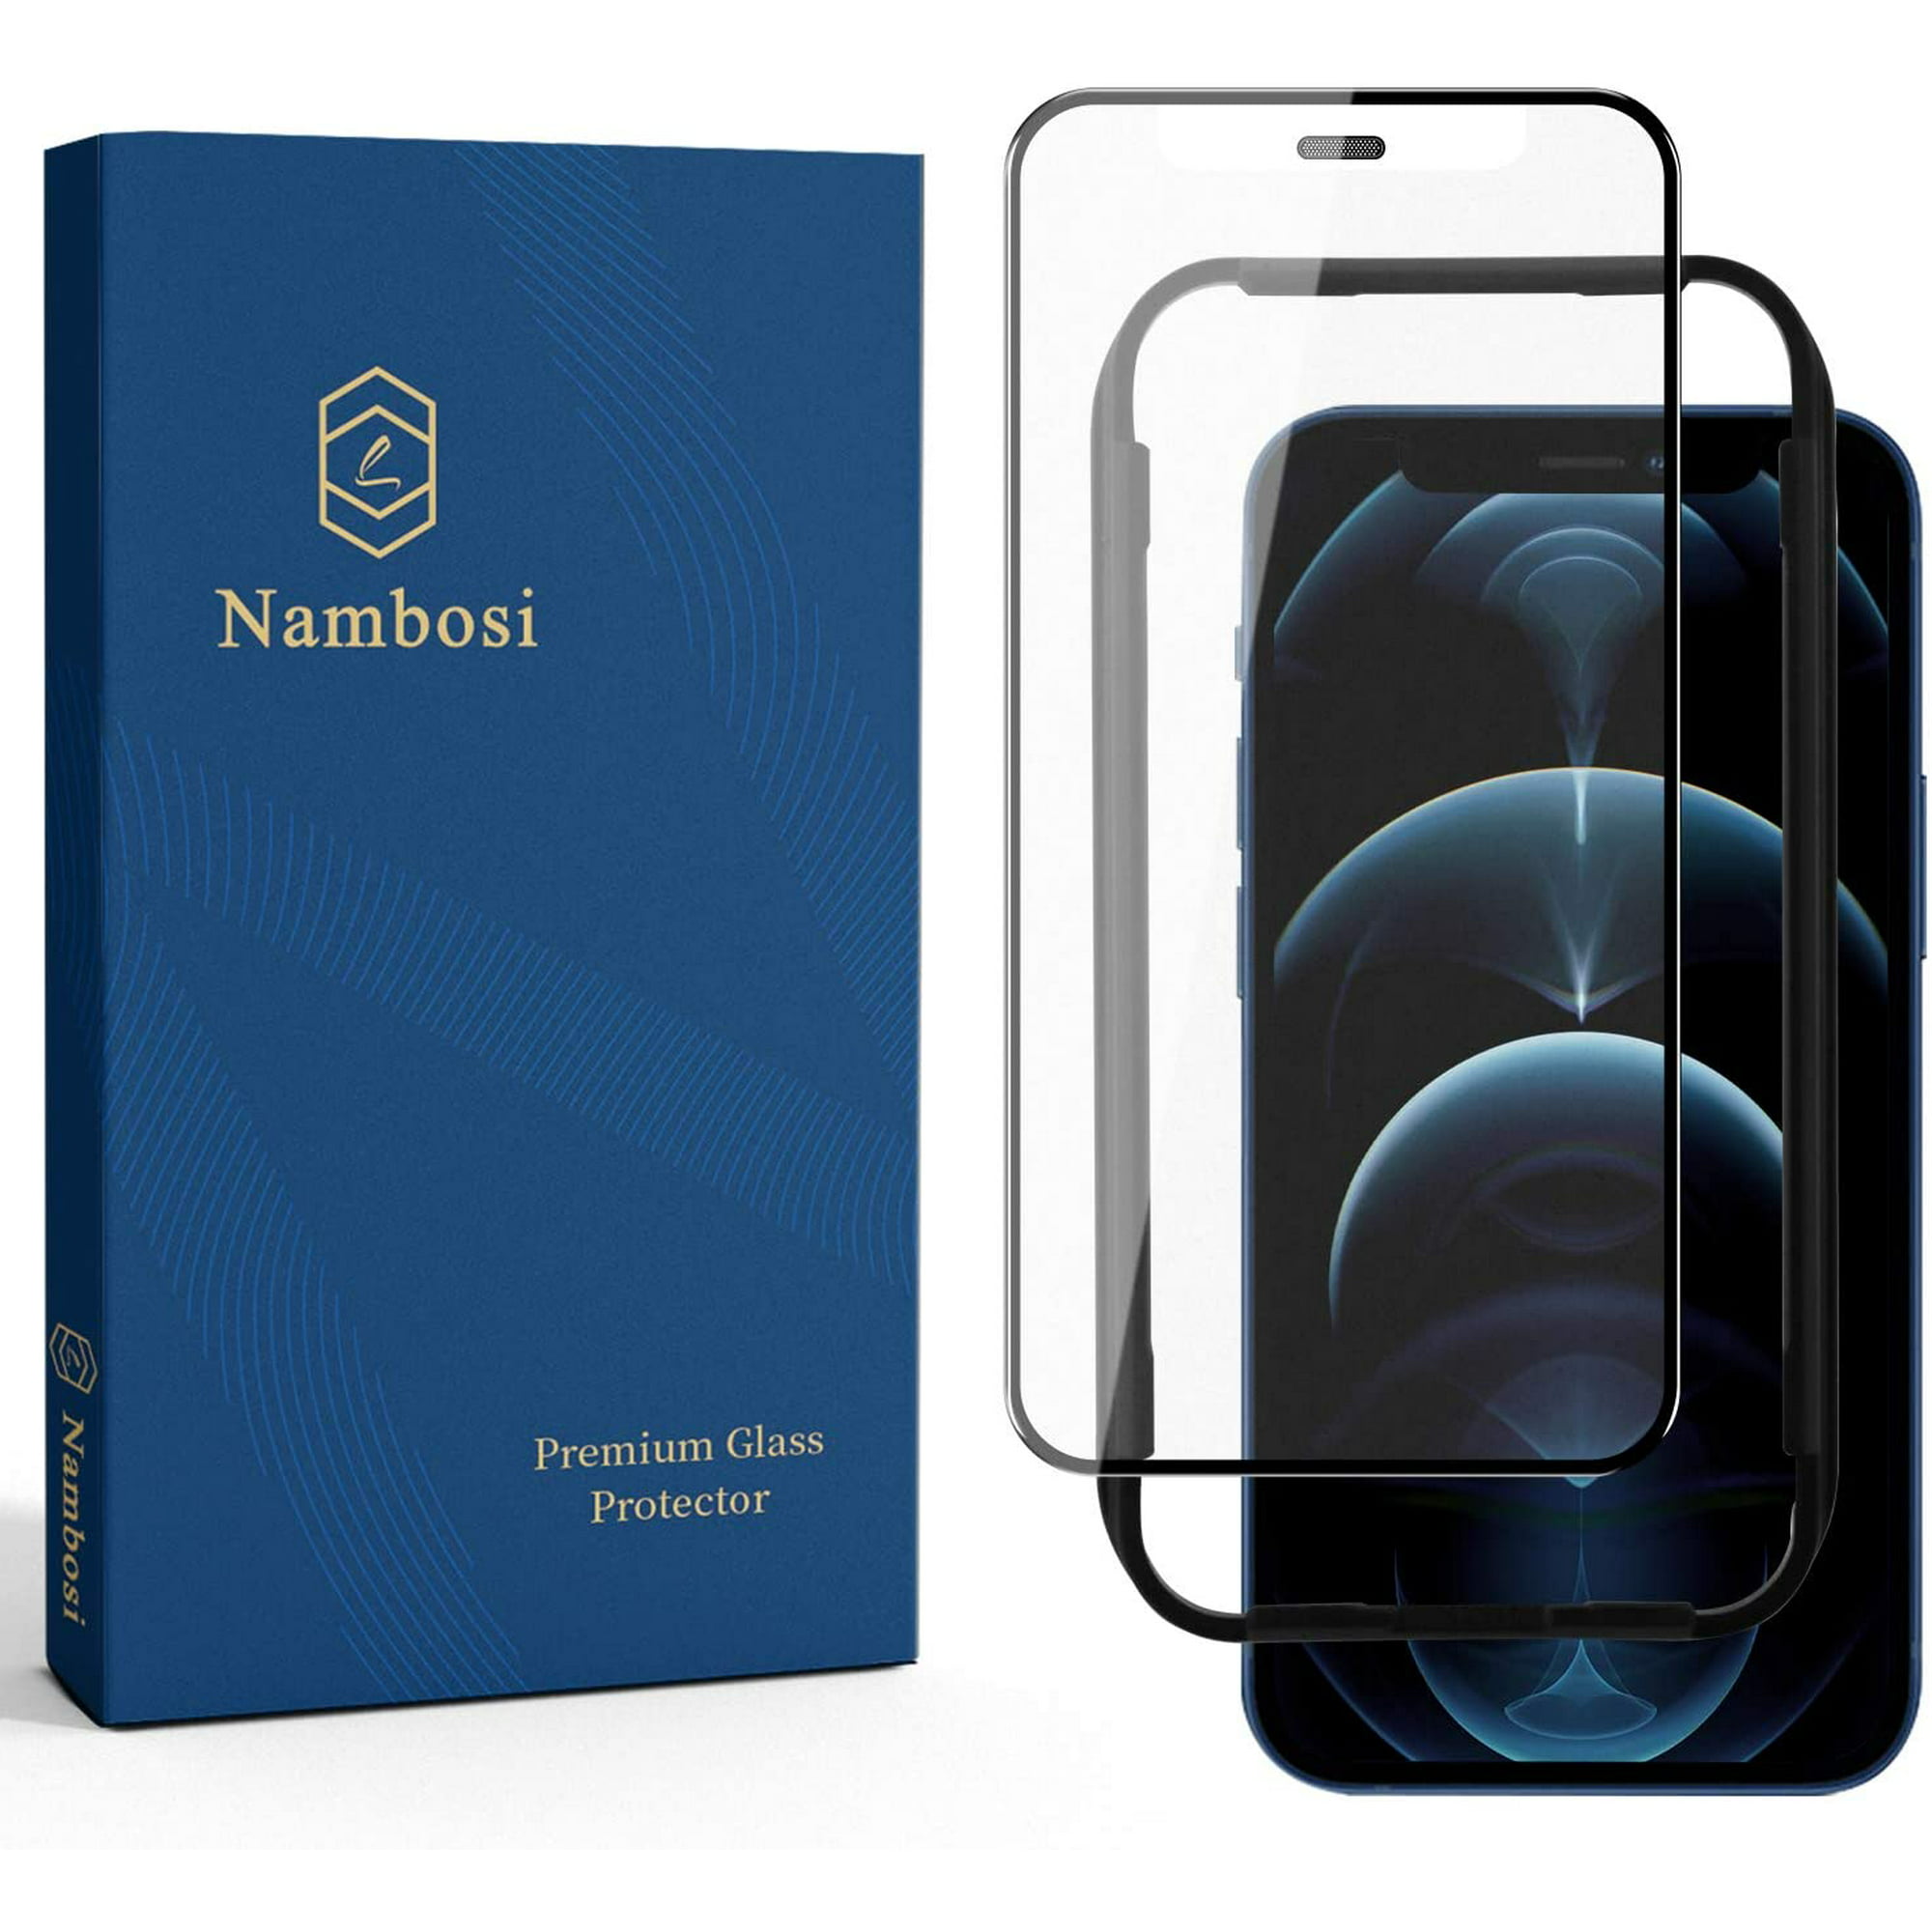 Nambosi Matte Screen Protector For Iphone 12 Mini 5 4 Inch Anti Glare Anti Fingerprint Full Coverage Tempered Glass Walmart Canada